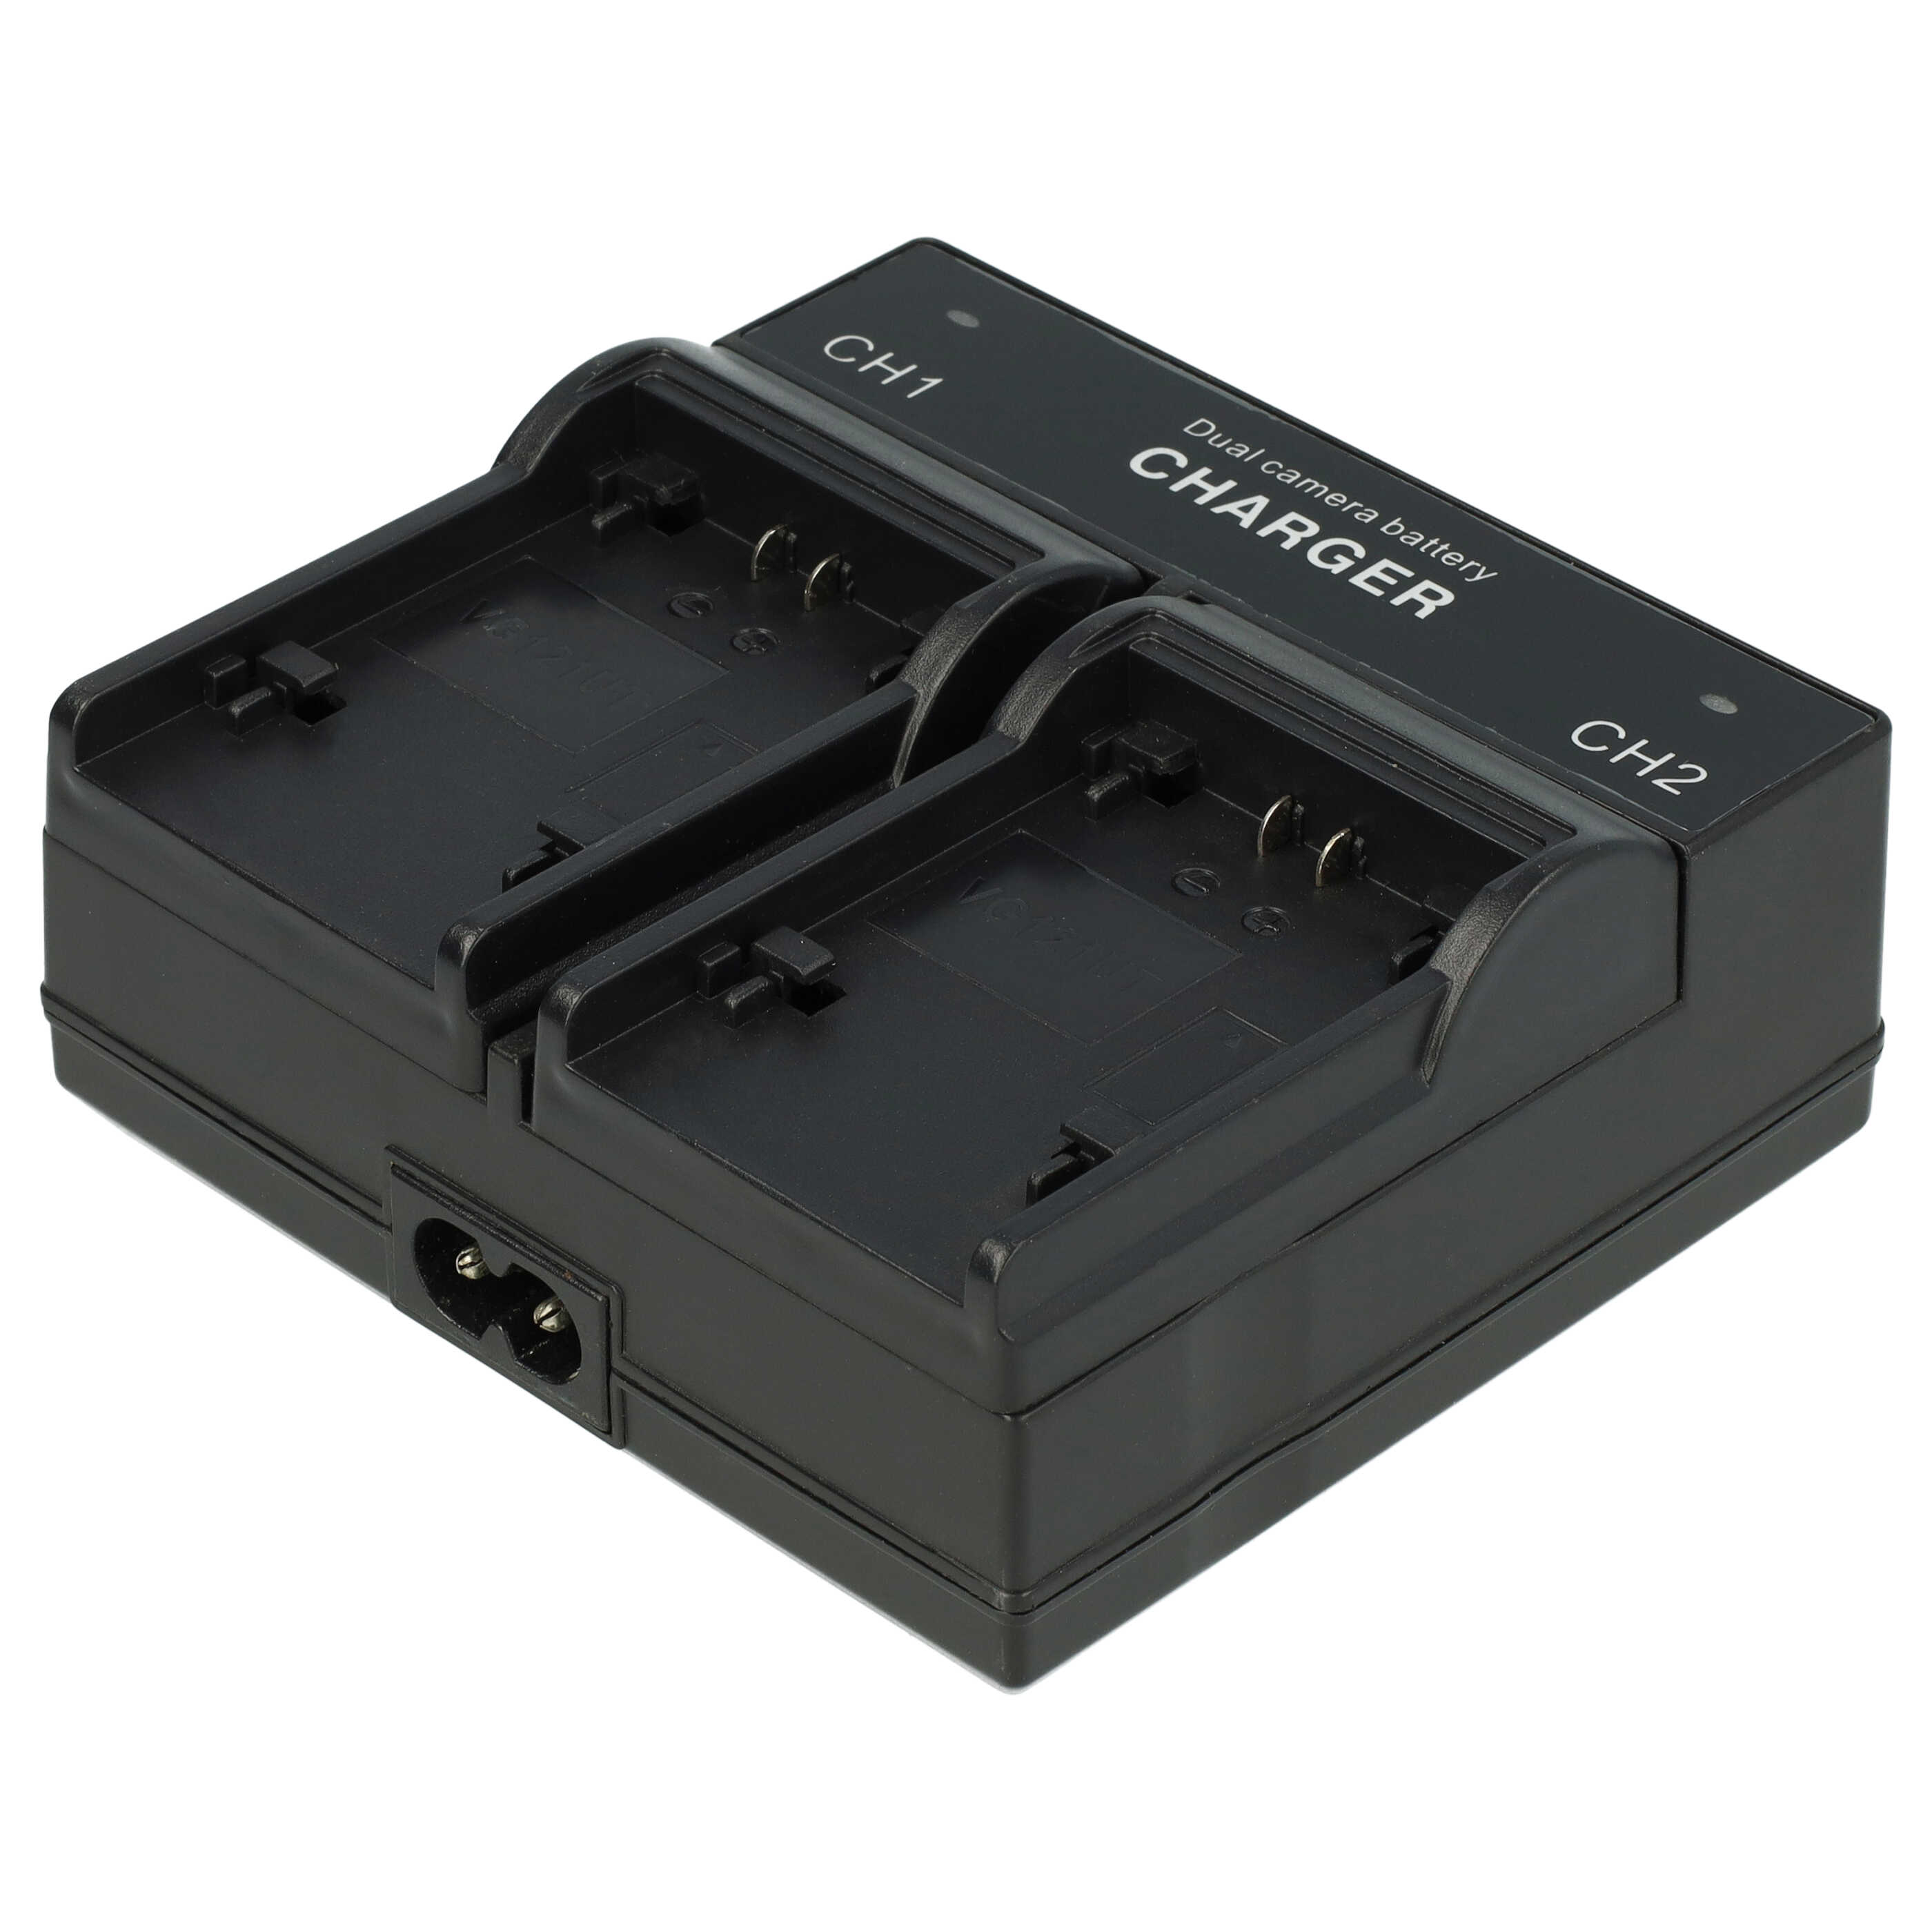 Caricabatterie + adattatore da auto per fotocamera Everio - 0.5 / 0.9A 4.2/8.4V 114,5cm